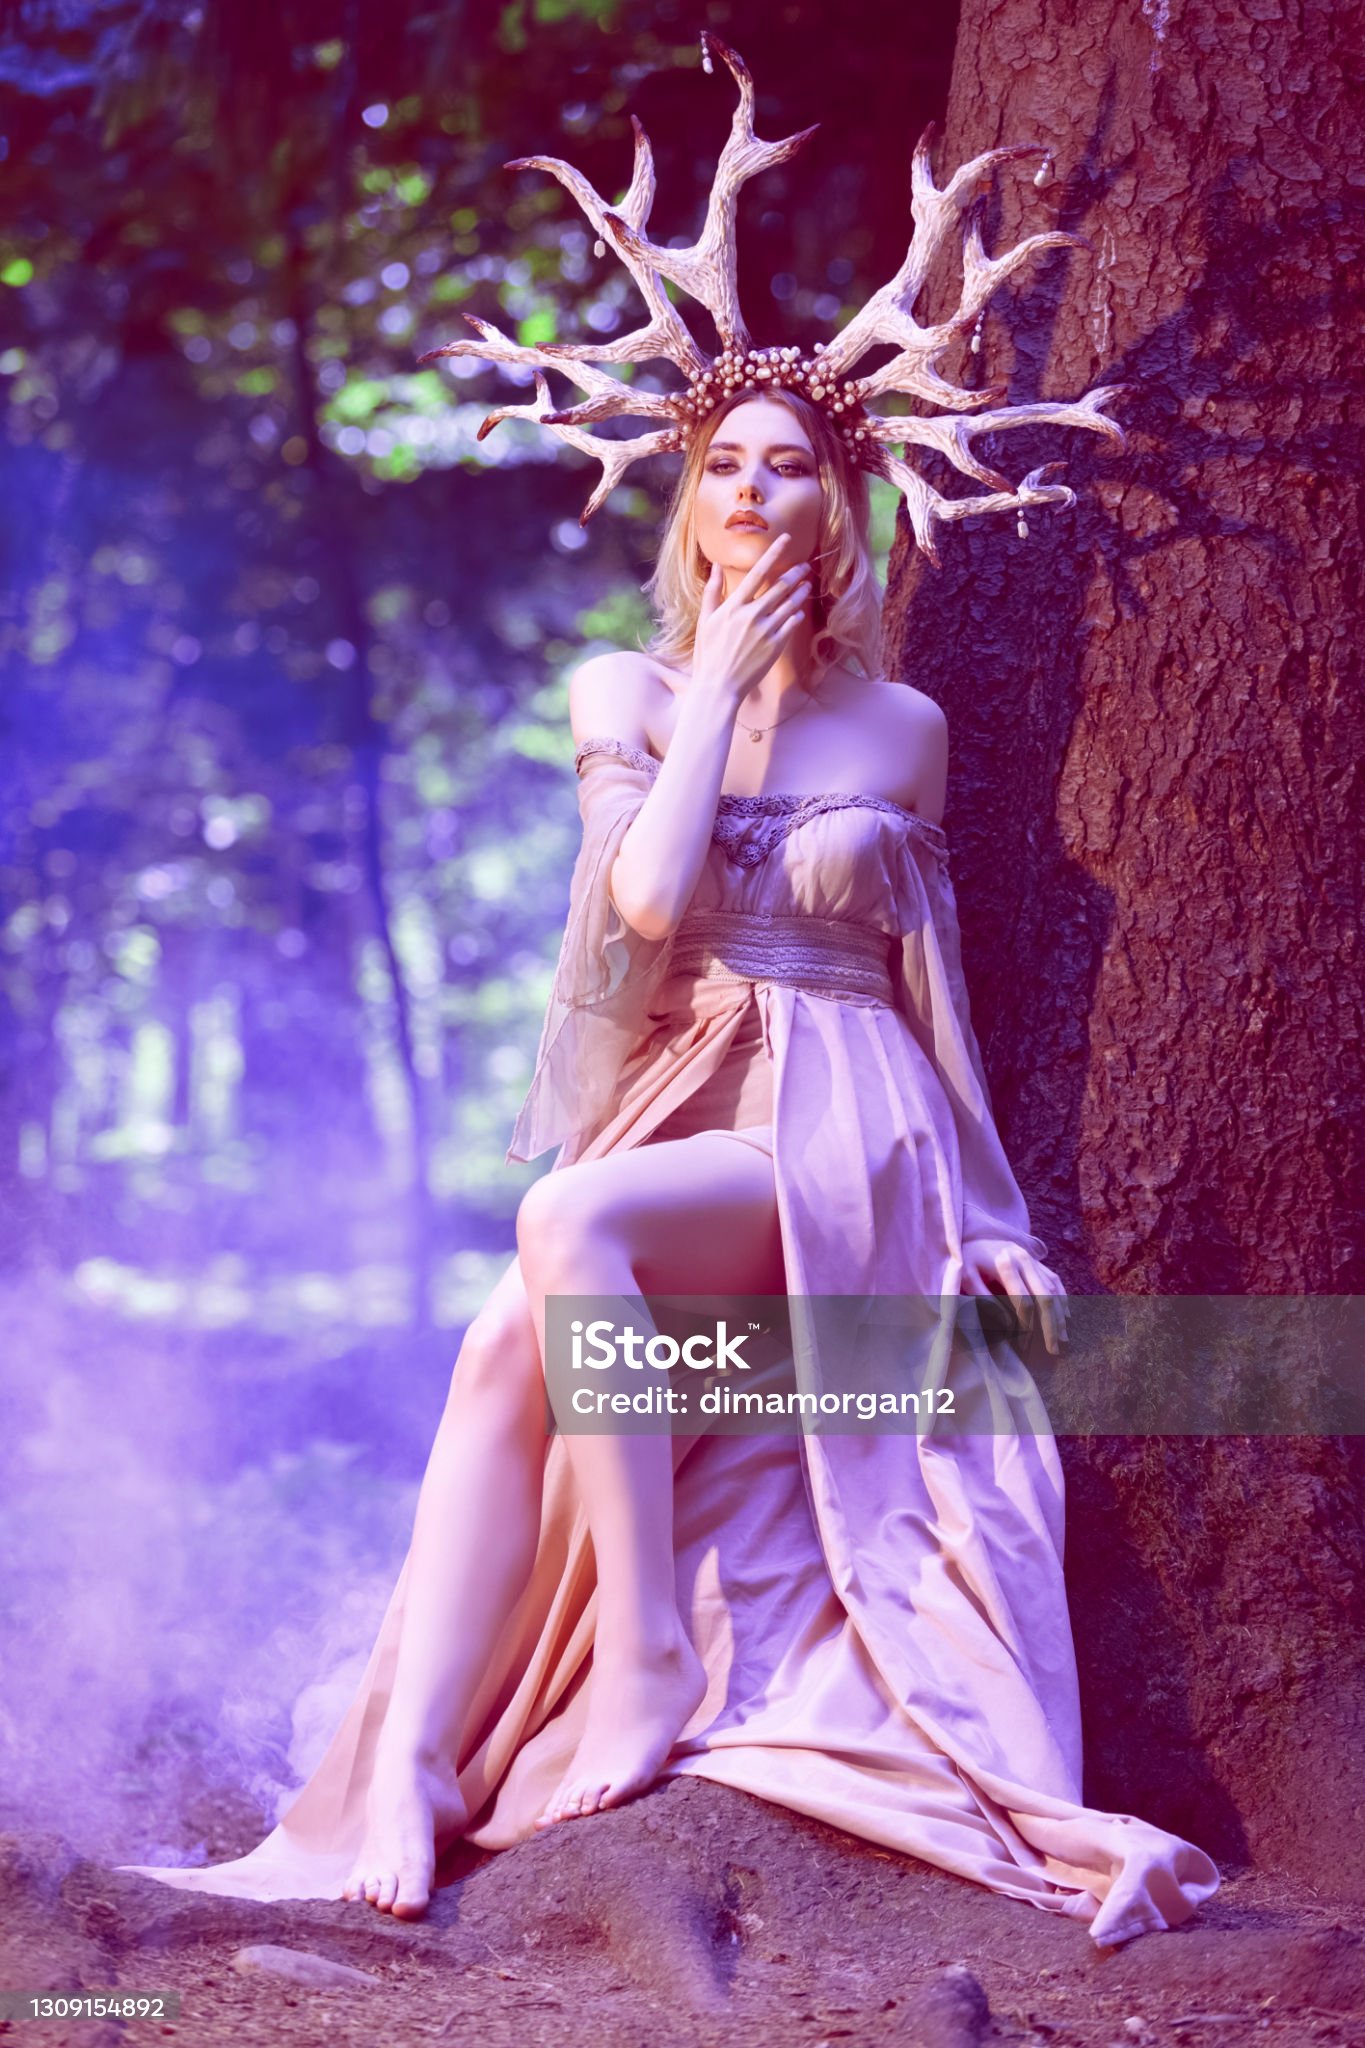 https://media.istockphoto.com/id/1309154892/photo/portrait-of-beautiful-girl-posing-with-artistic-deer-horns-in-summer-forest-near-high-tree.jpg?s=2048x2048&amp;w=is&amp;k=20&amp;c=nIfGhDCLYoWY6zOUrJ5o-m1V3awpvasUT3COTpLgiDs=